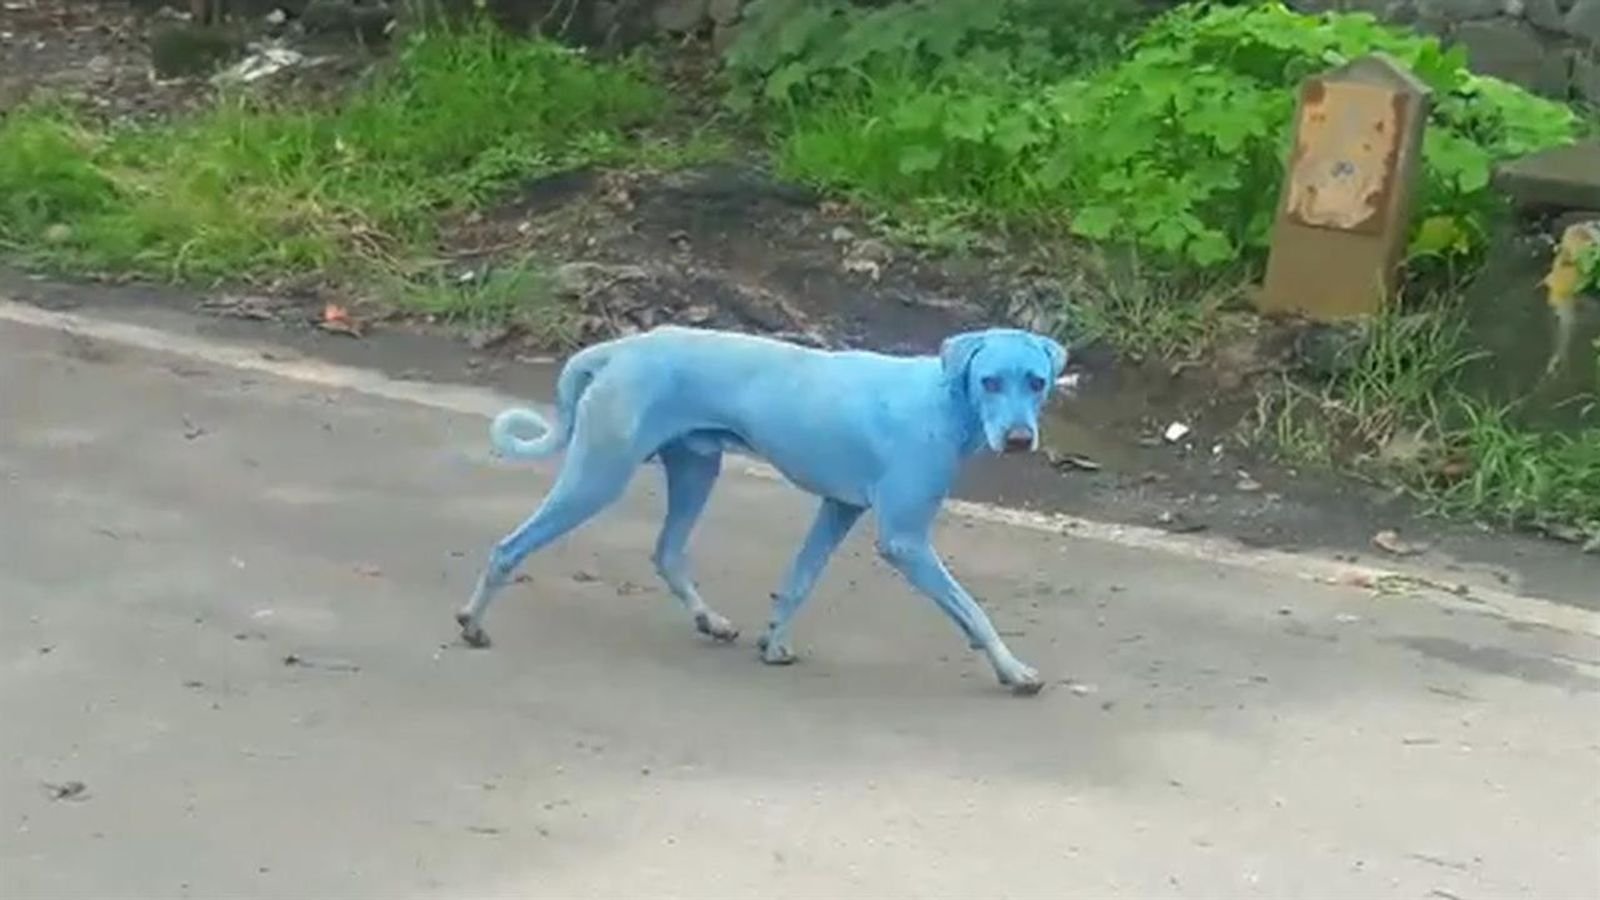 Indiens blaue Hunde – was ist die Ursache?